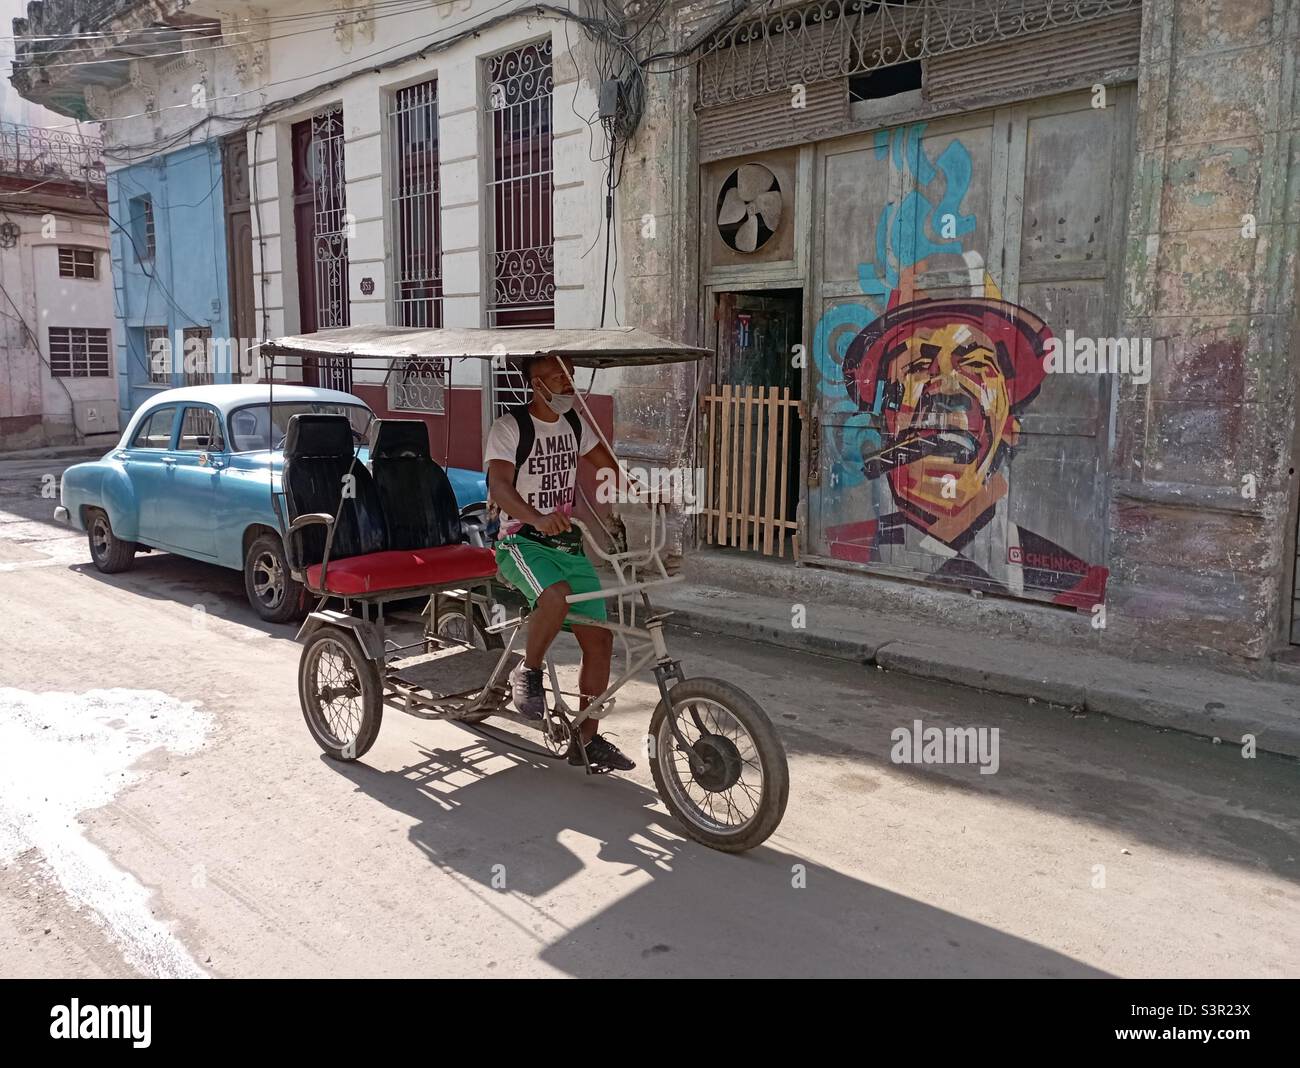 Transportation system in Cuba Stock Photo